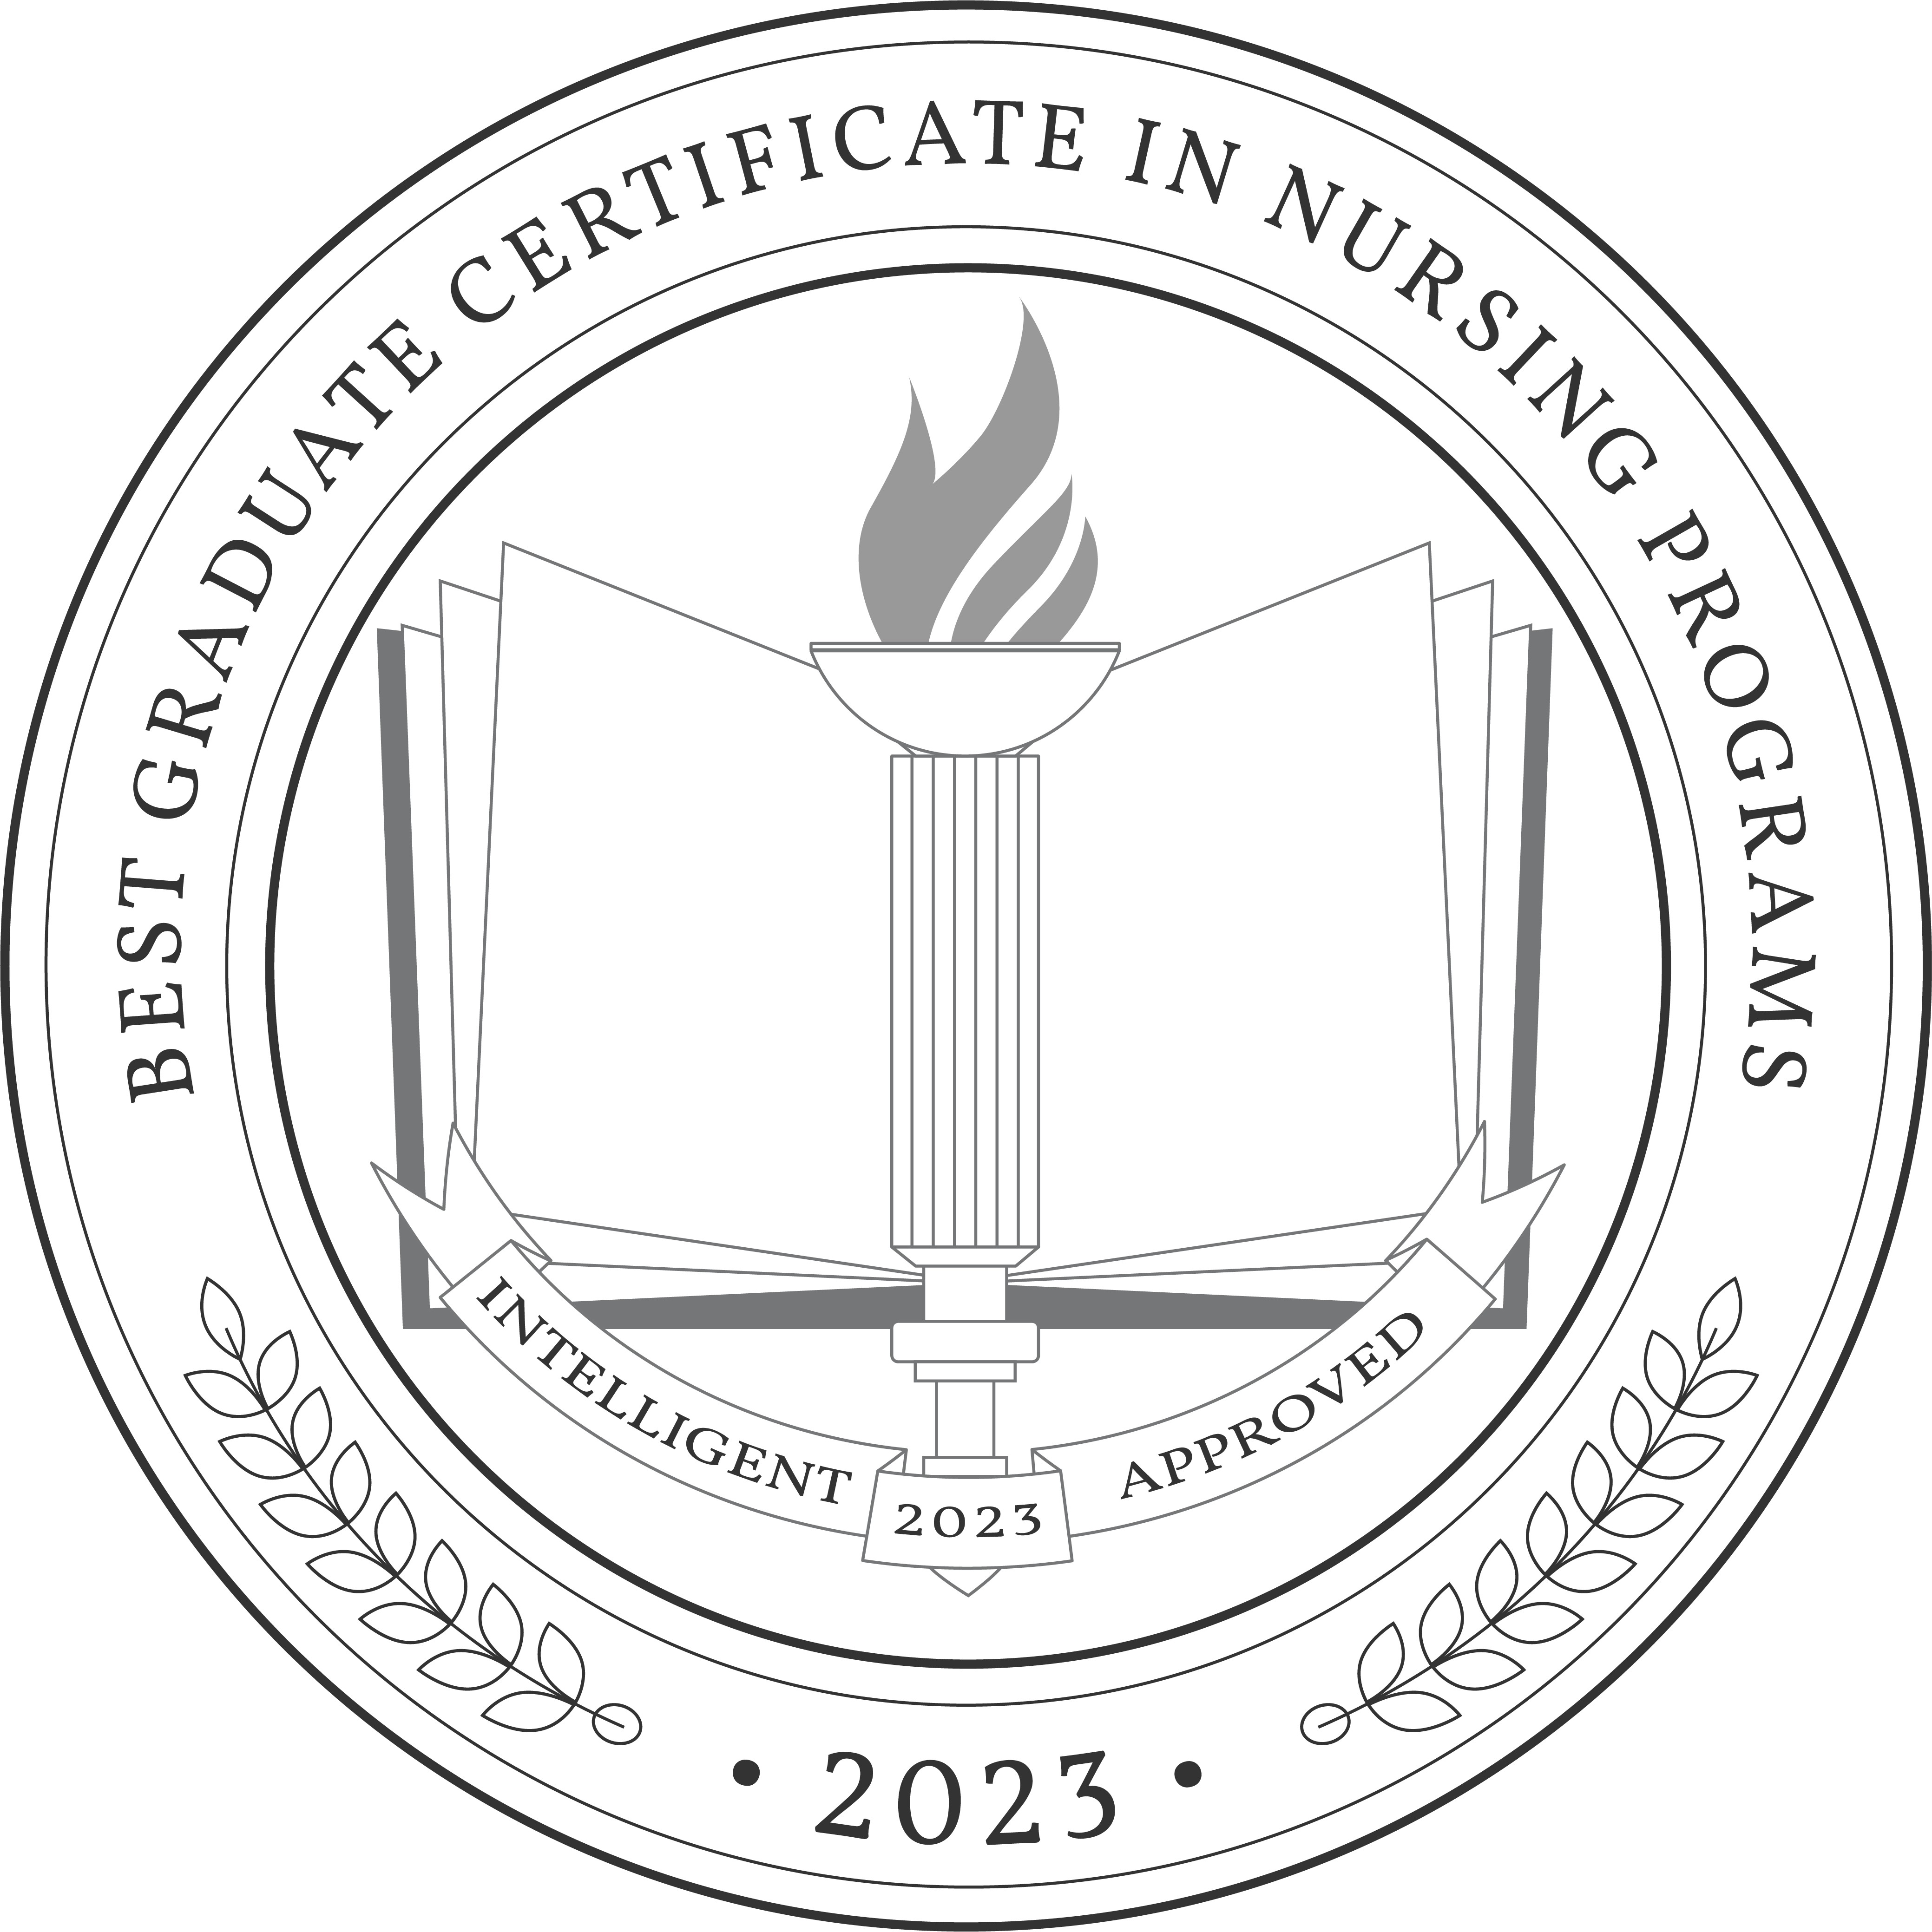 Best Graduate Certificate in Nursing Programs 2023